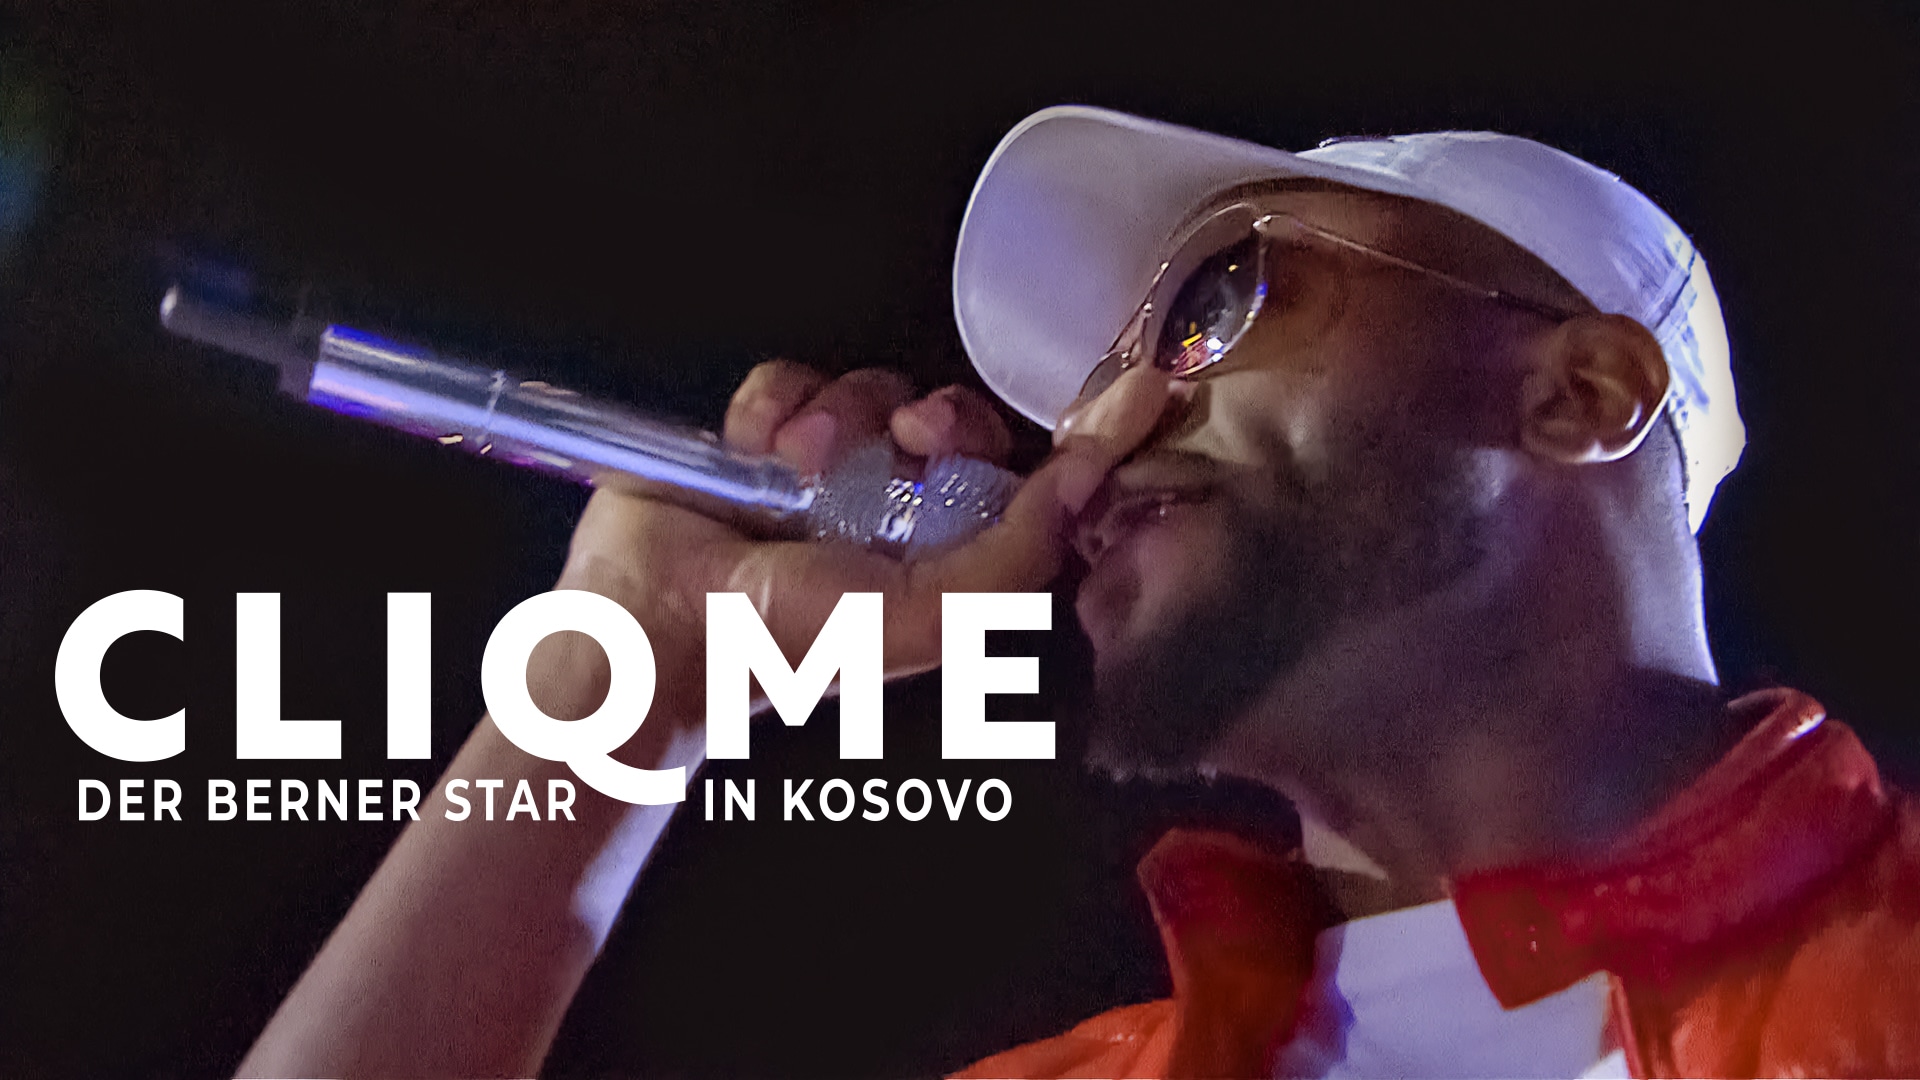 Cliqme – Der Berner Star in Kosovo